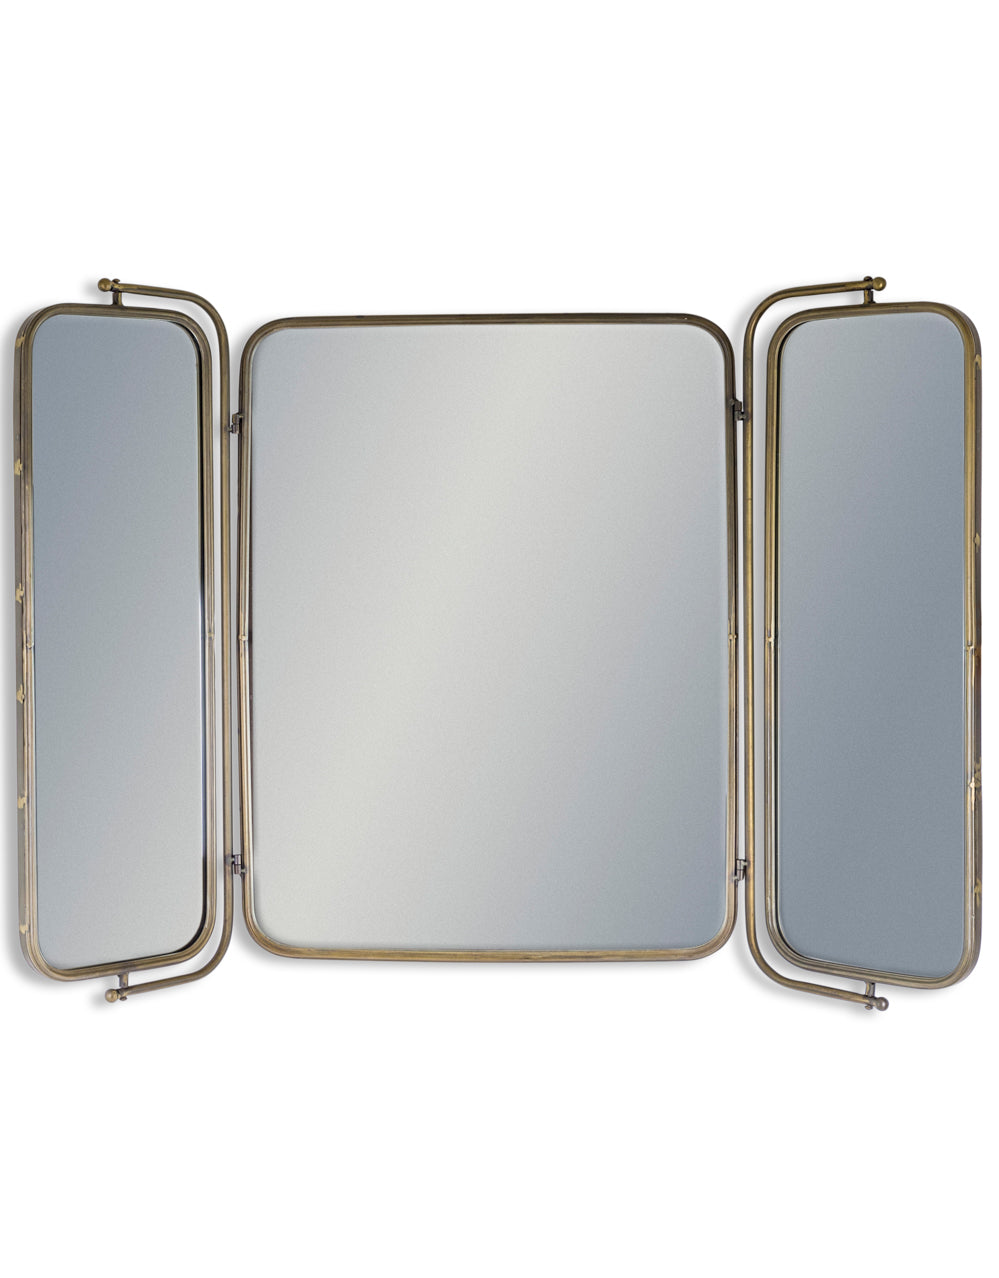 Industrial 3-Fold Mirror